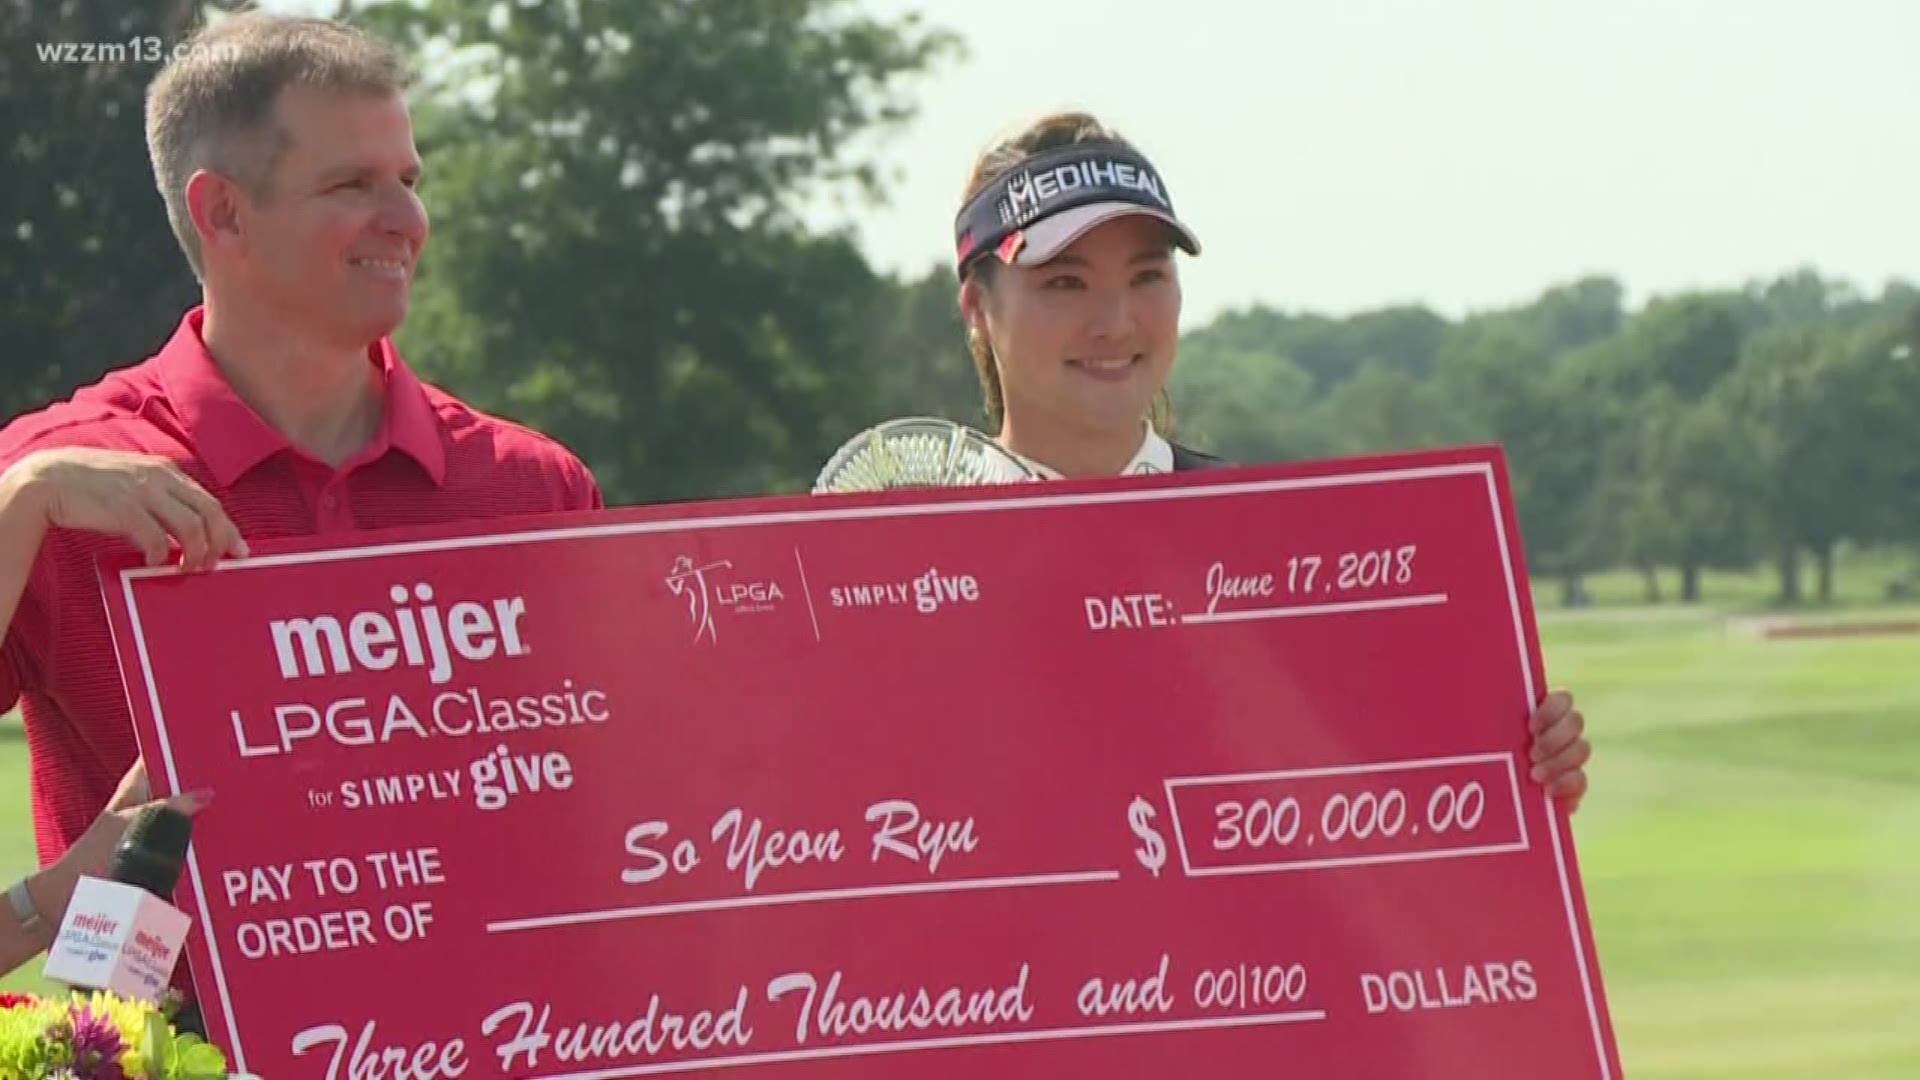 Meijer LPGA champion donates a portion of her winnings